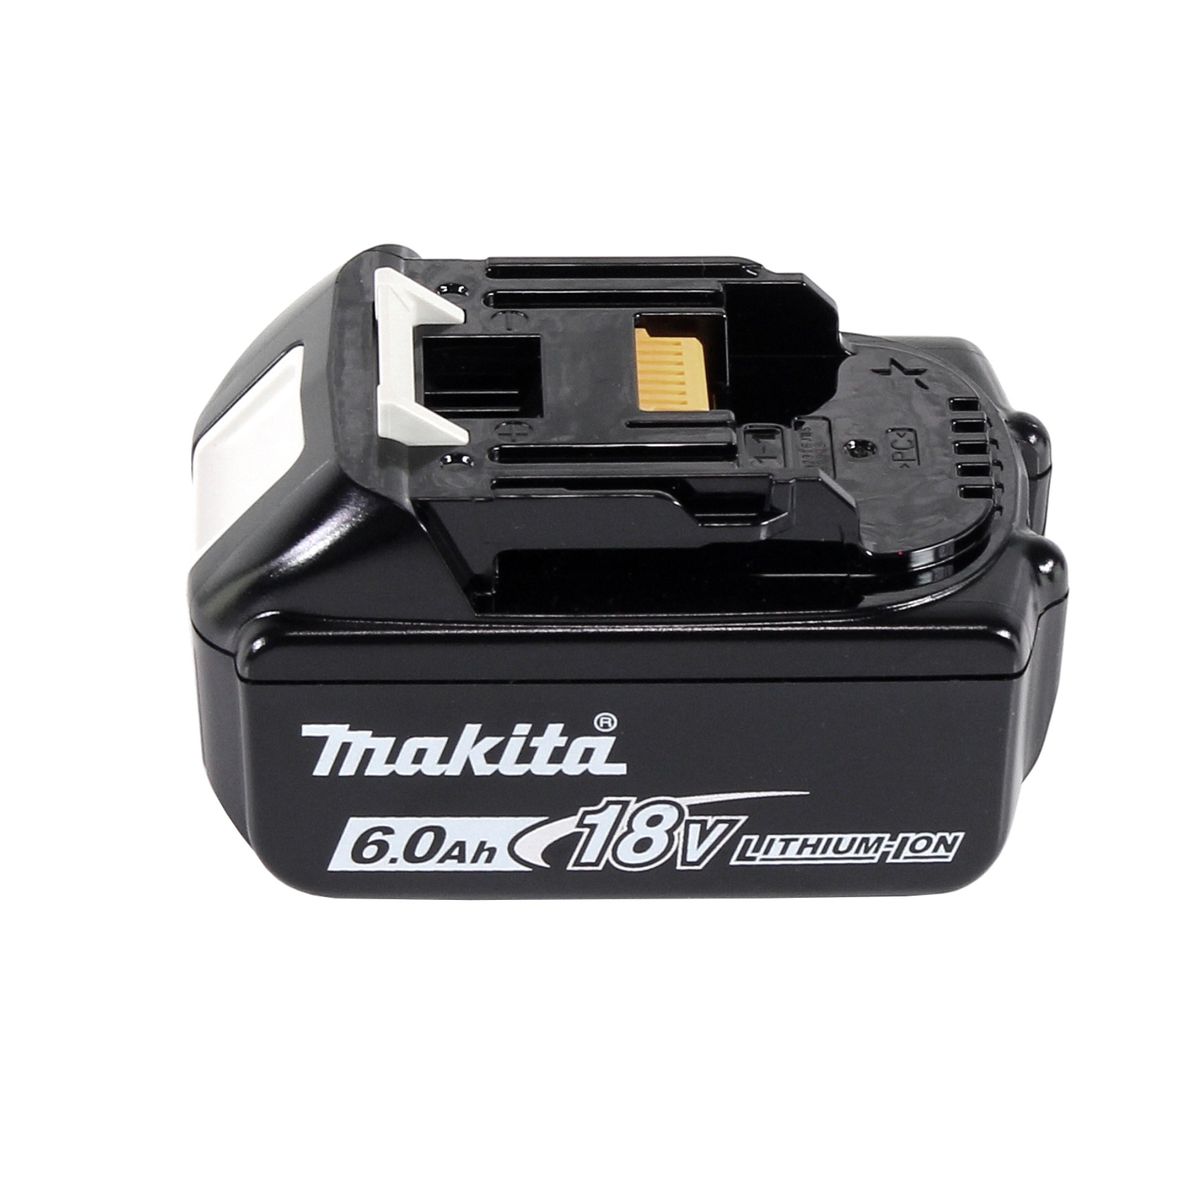 Makita DDF 484 G1 Akku Bohrschrauber Brushless 18 V 54 Nm + 1x Akku 6,0 Ah - ohne Ladegerät